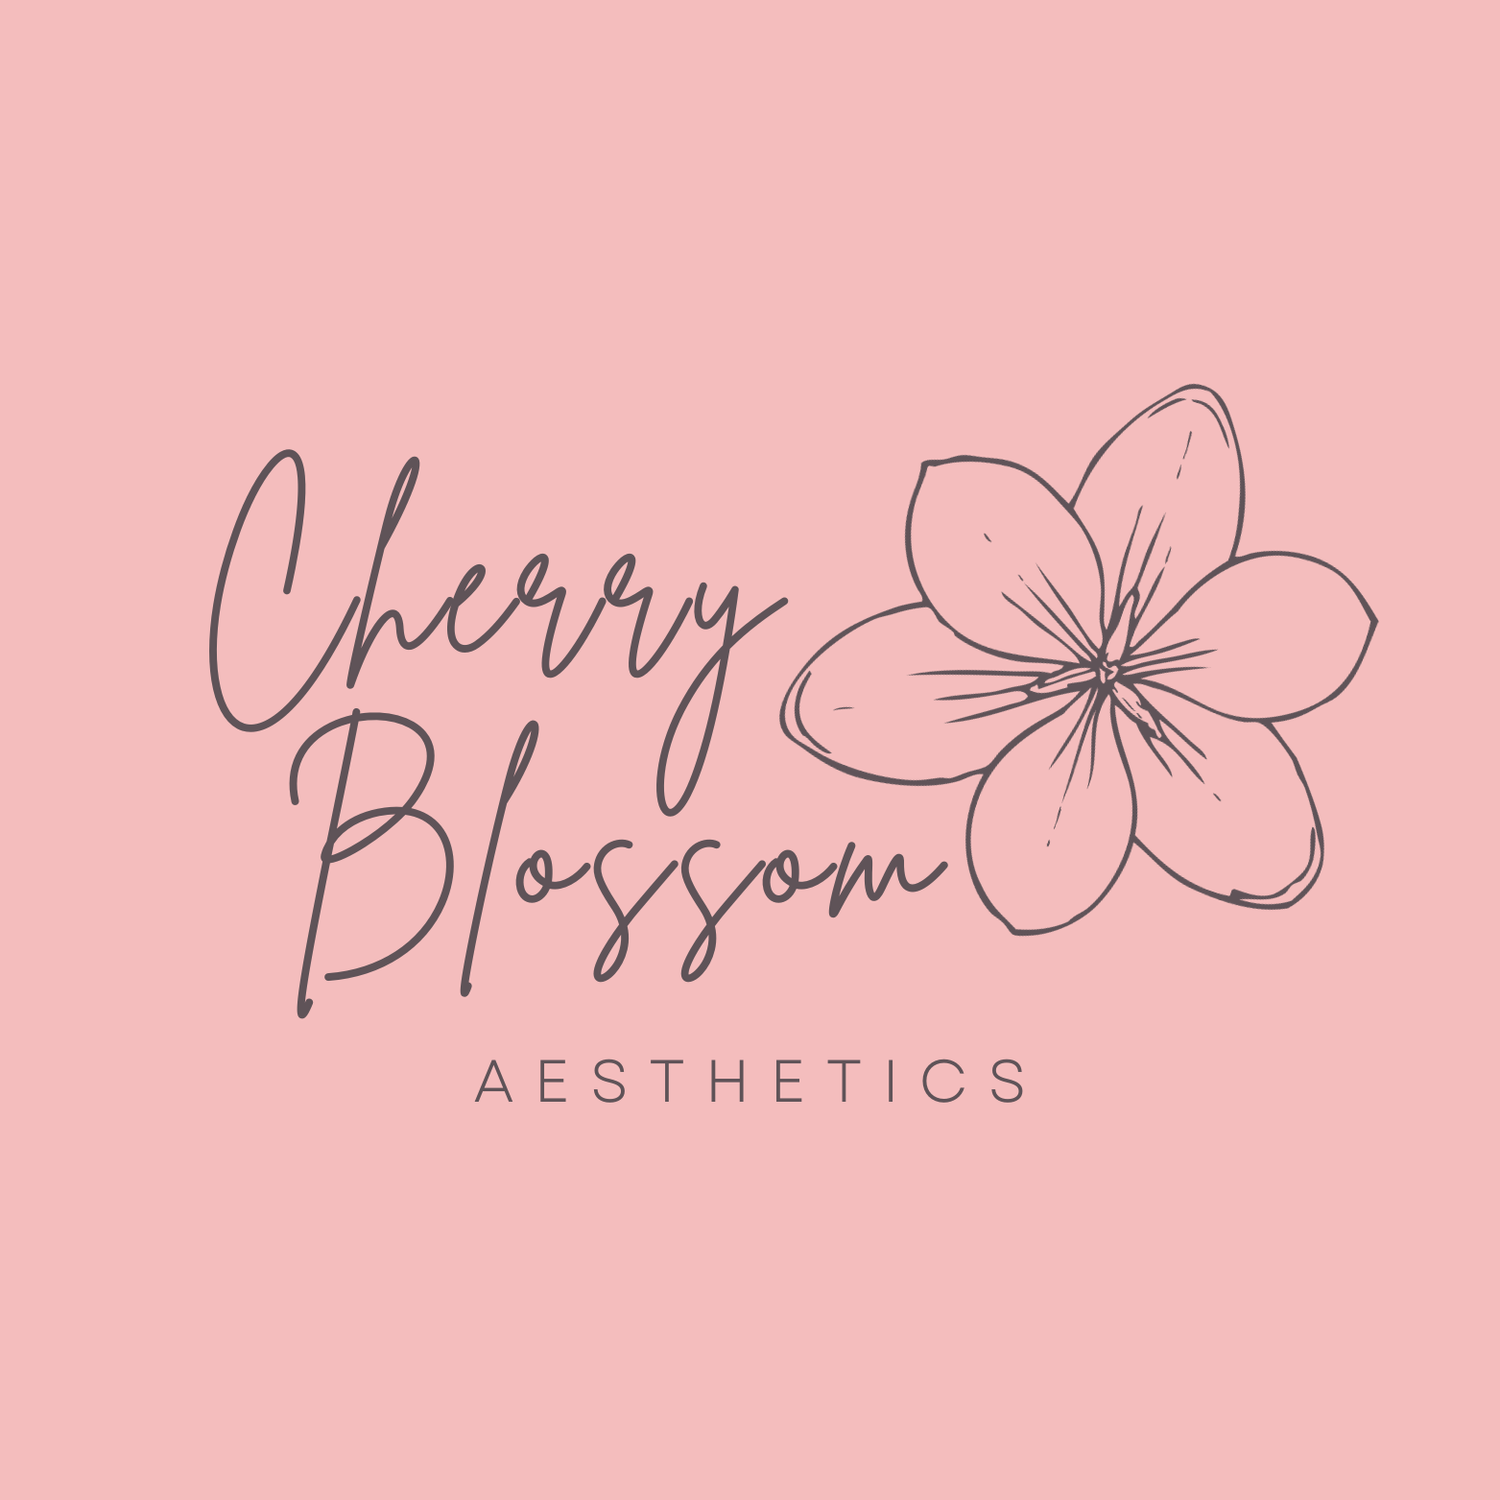 Cherry Blossom Aesthetics